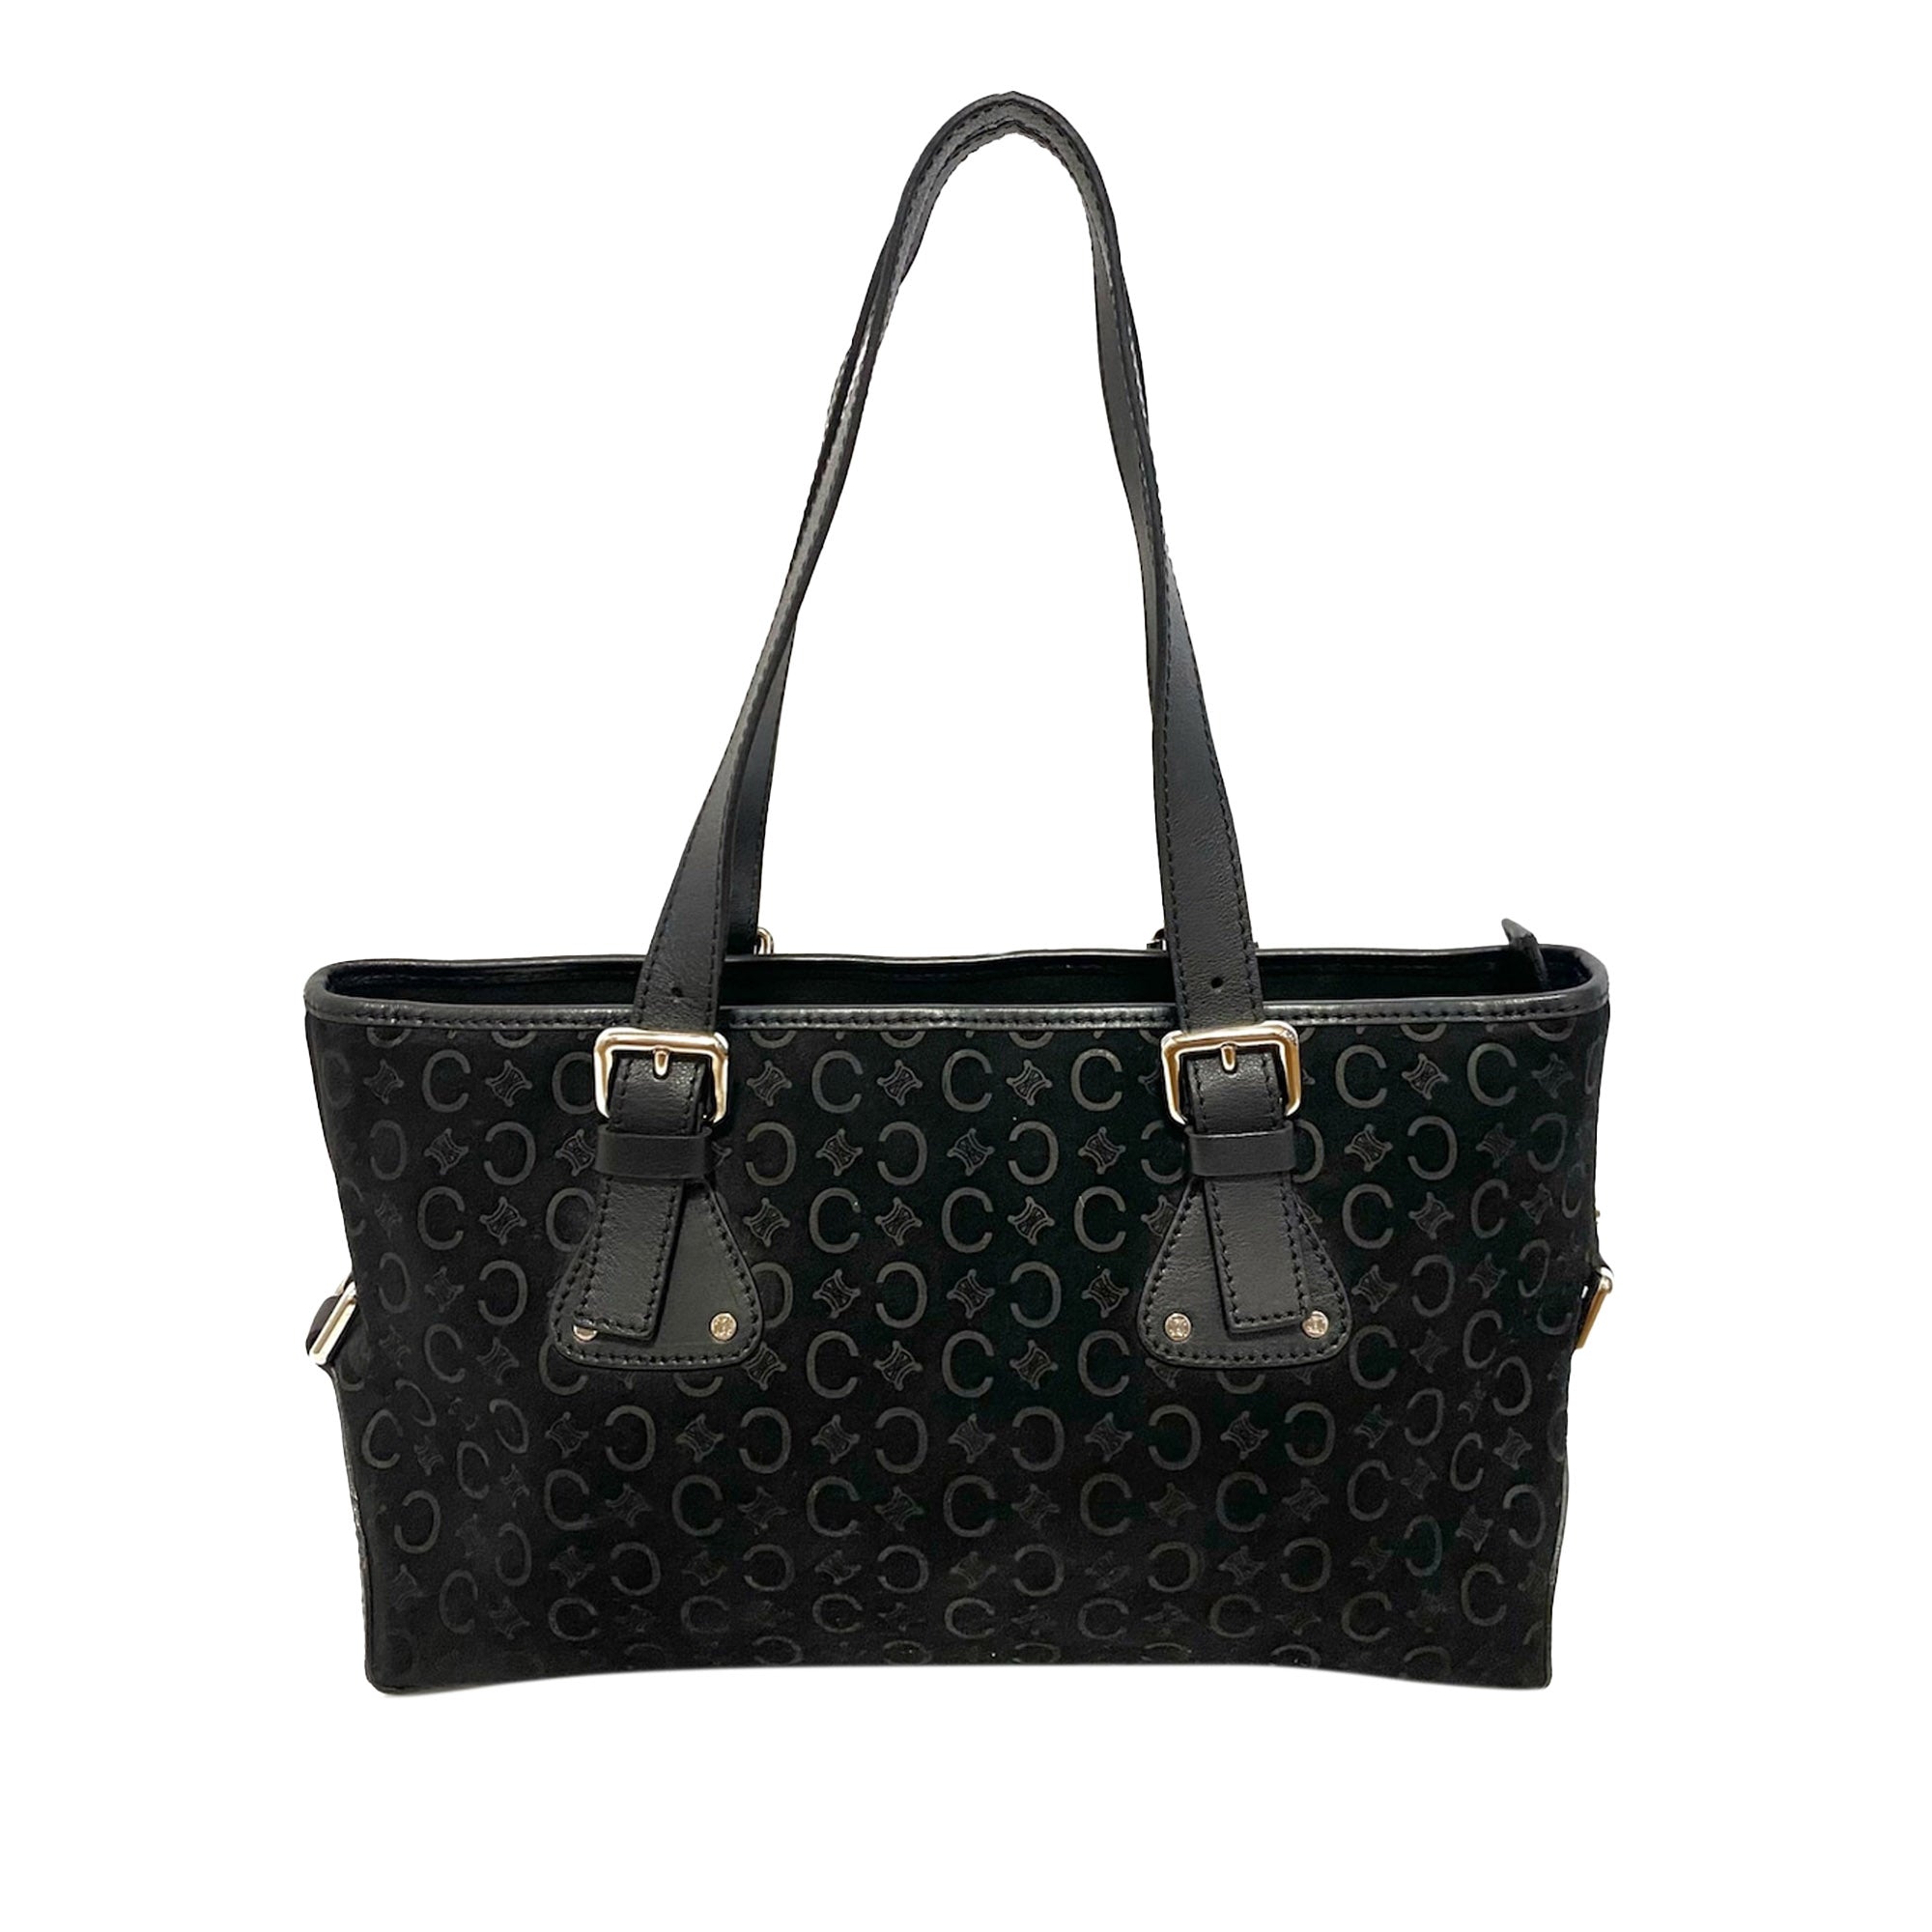 Celine Womens Monochrome Shoulder Handbag